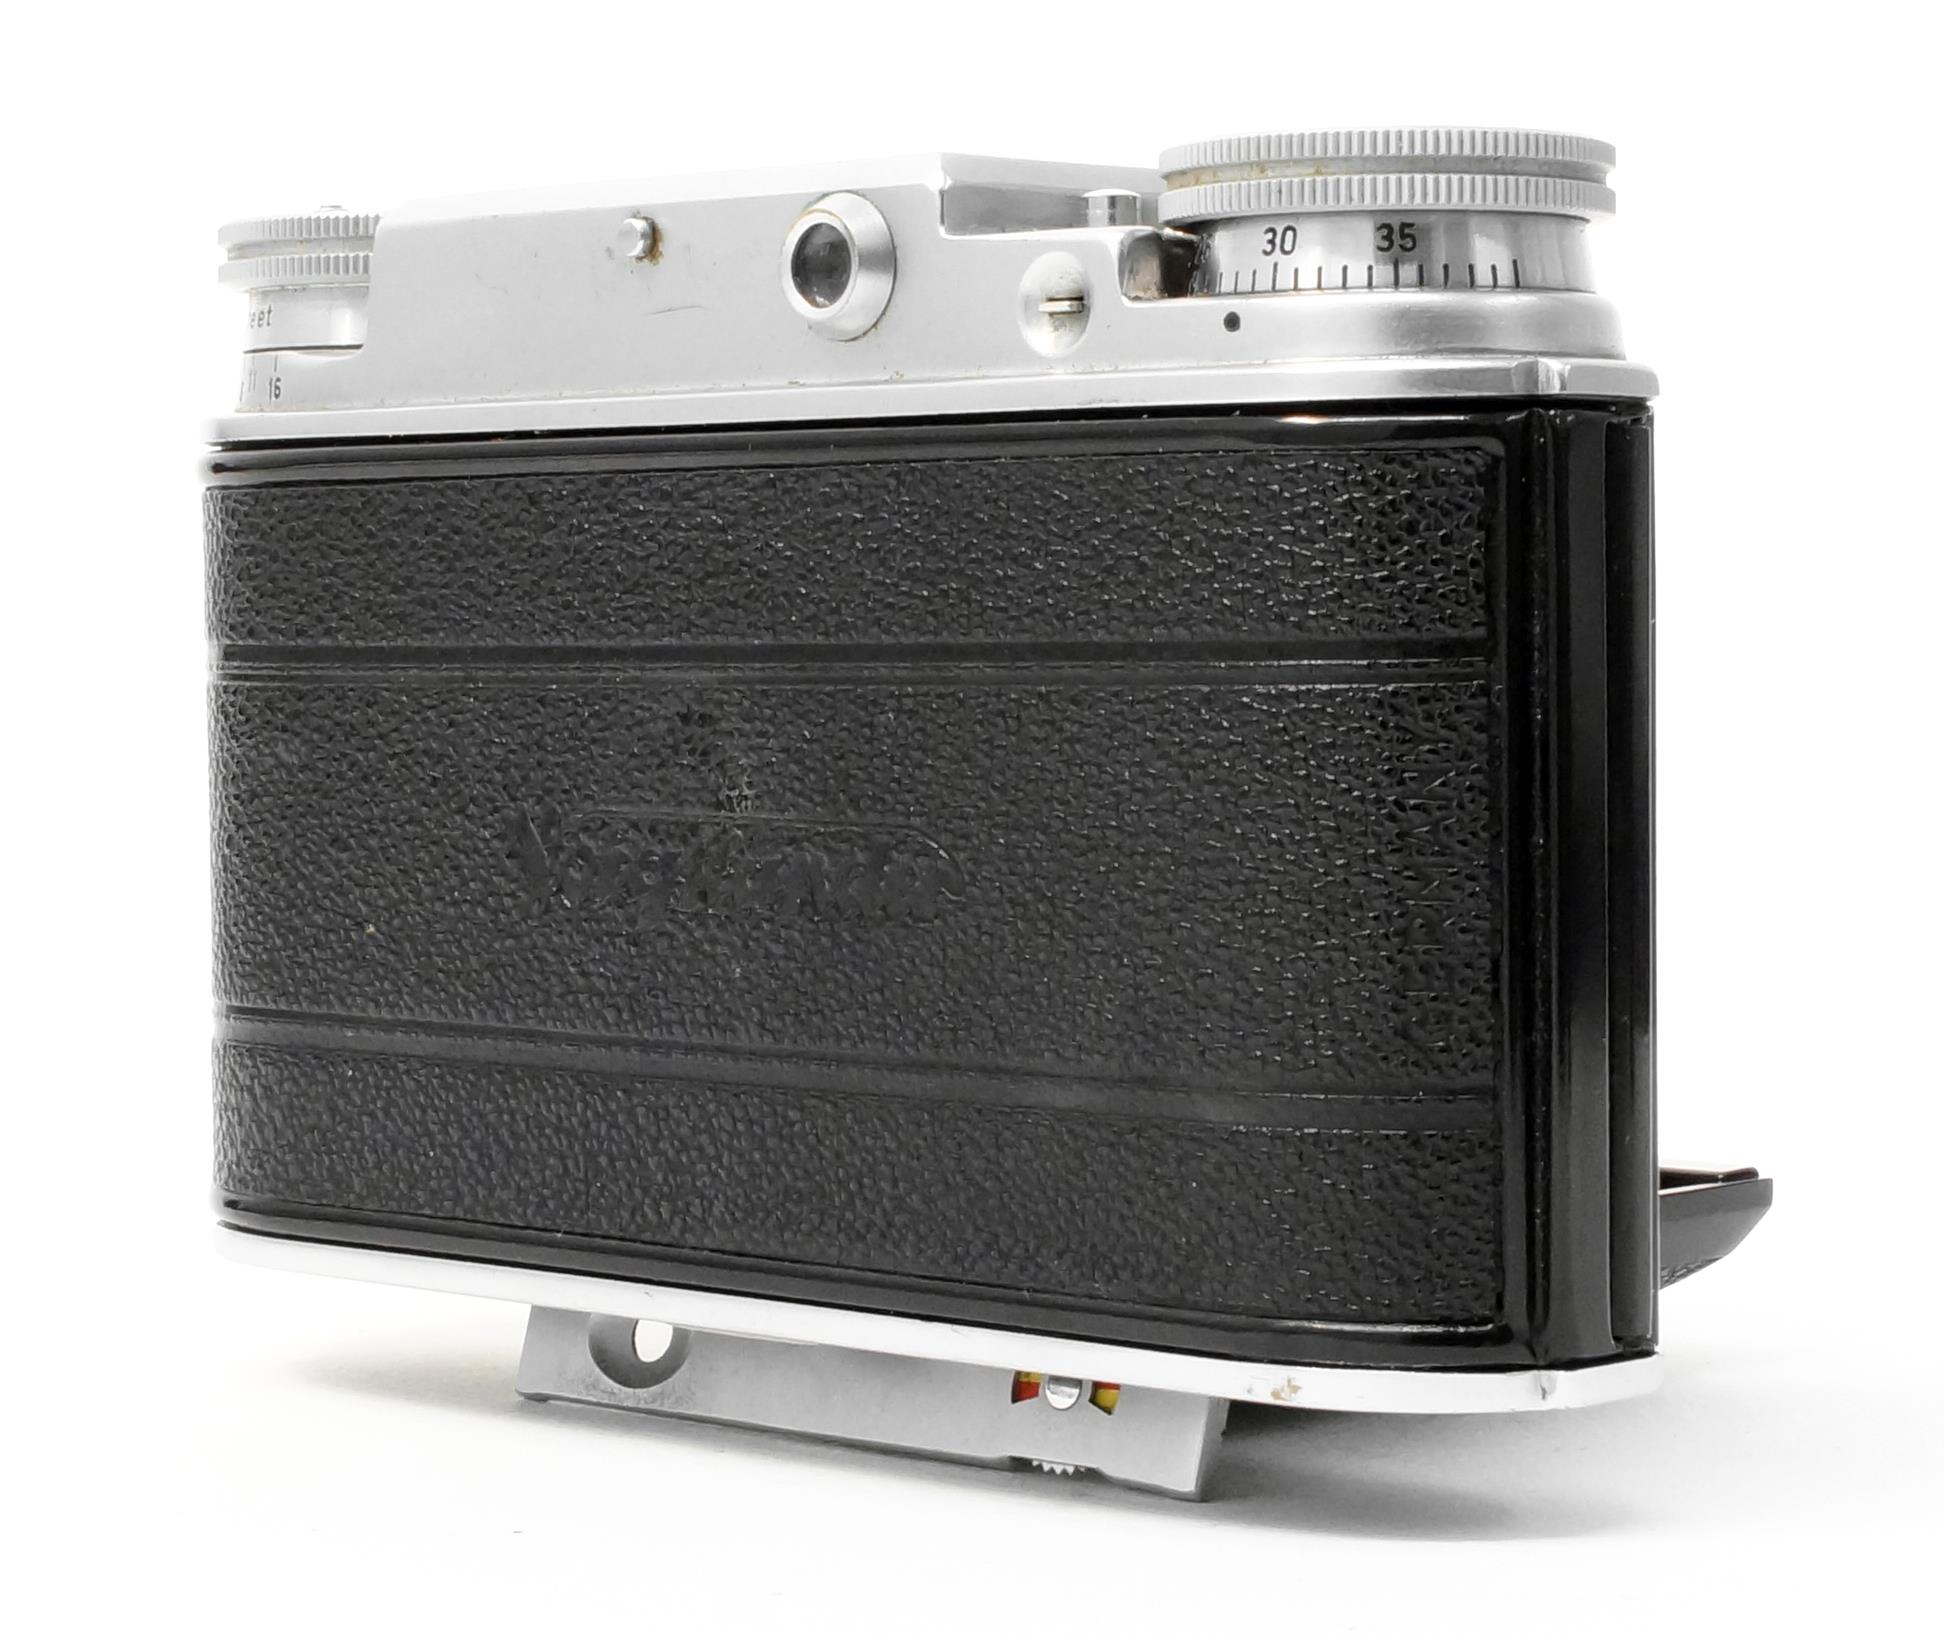 A Voigtlander Vito III Rangefinder camera - Ultron F2/50 - C:1951 - Slow speeds sticky - Image 4 of 5